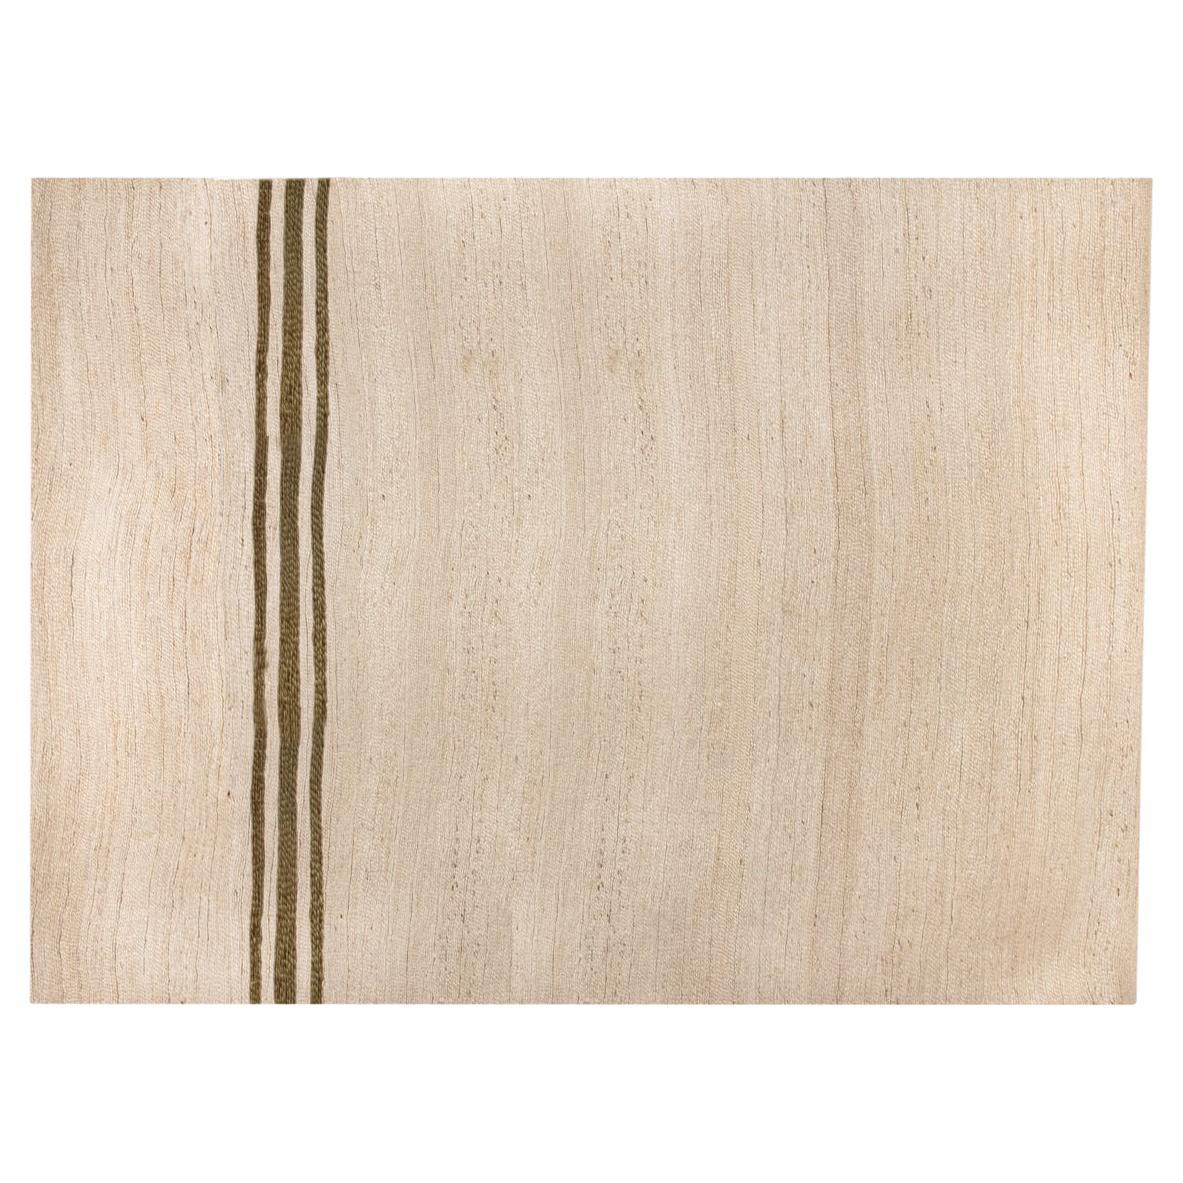 Modern Hand stitched Jute Carpet Rug Provenza Green Stripes & Ivory